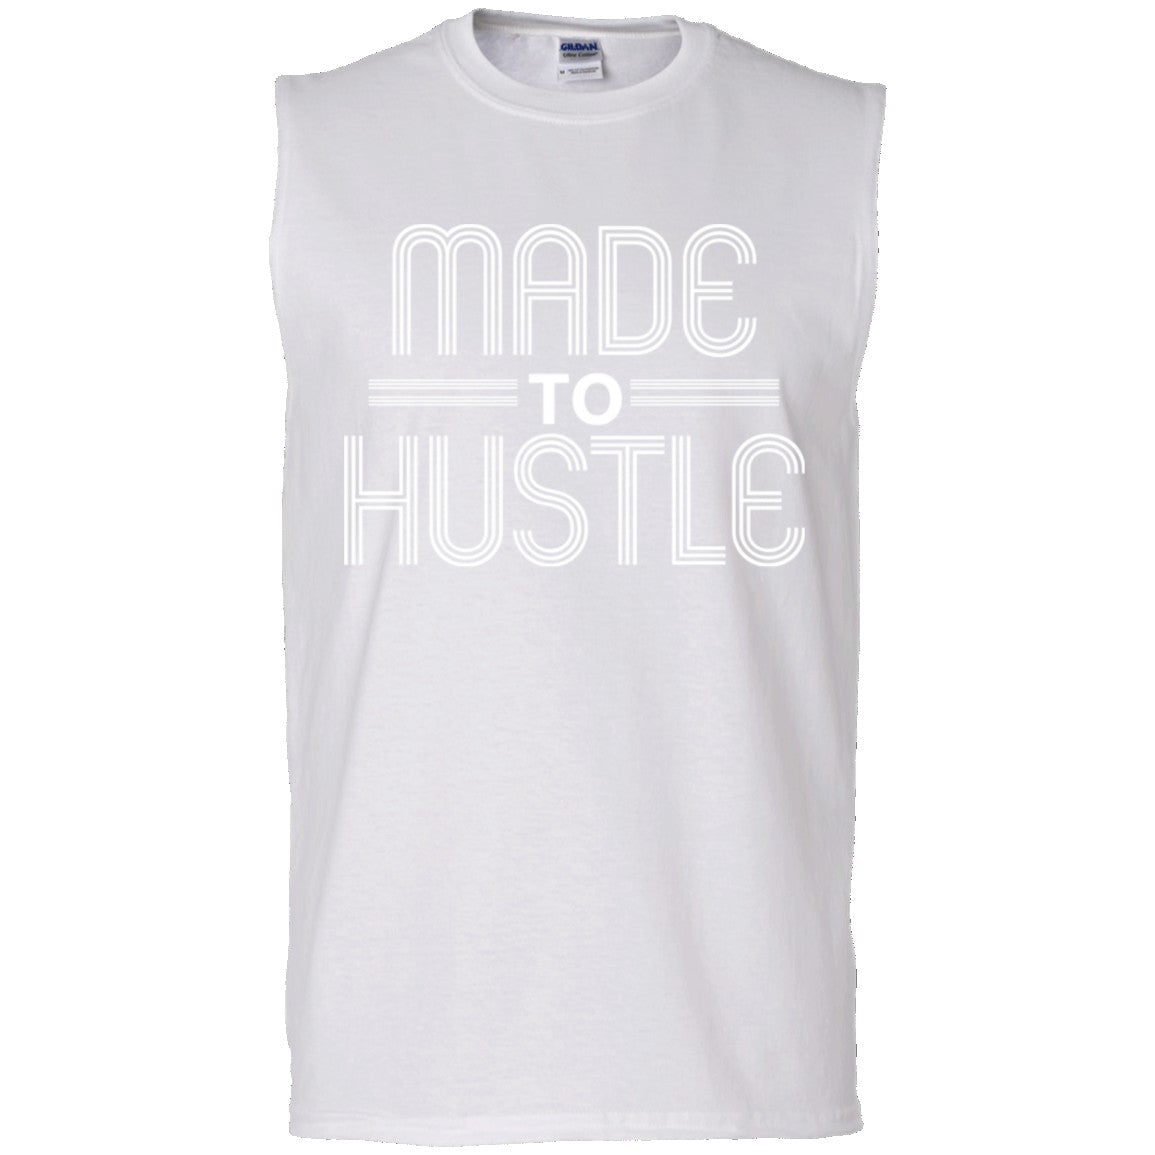 Made to Hustle Men's Ultra Cotton Sleeveless T-Shirt freeshipping - Bedroka Streetwear LLC